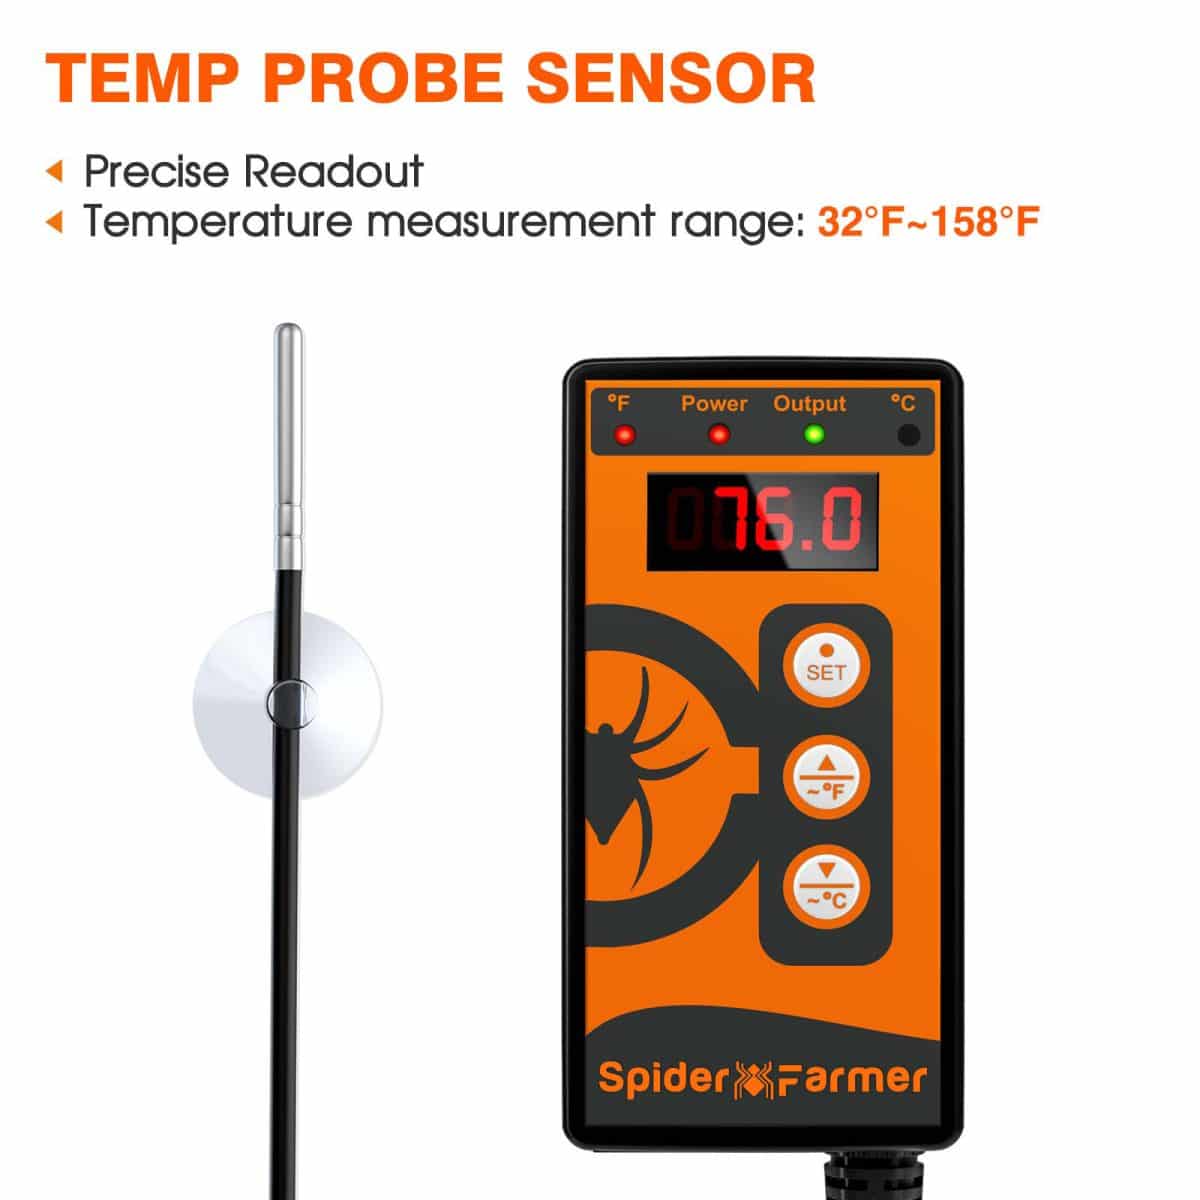 Temp probe sensor